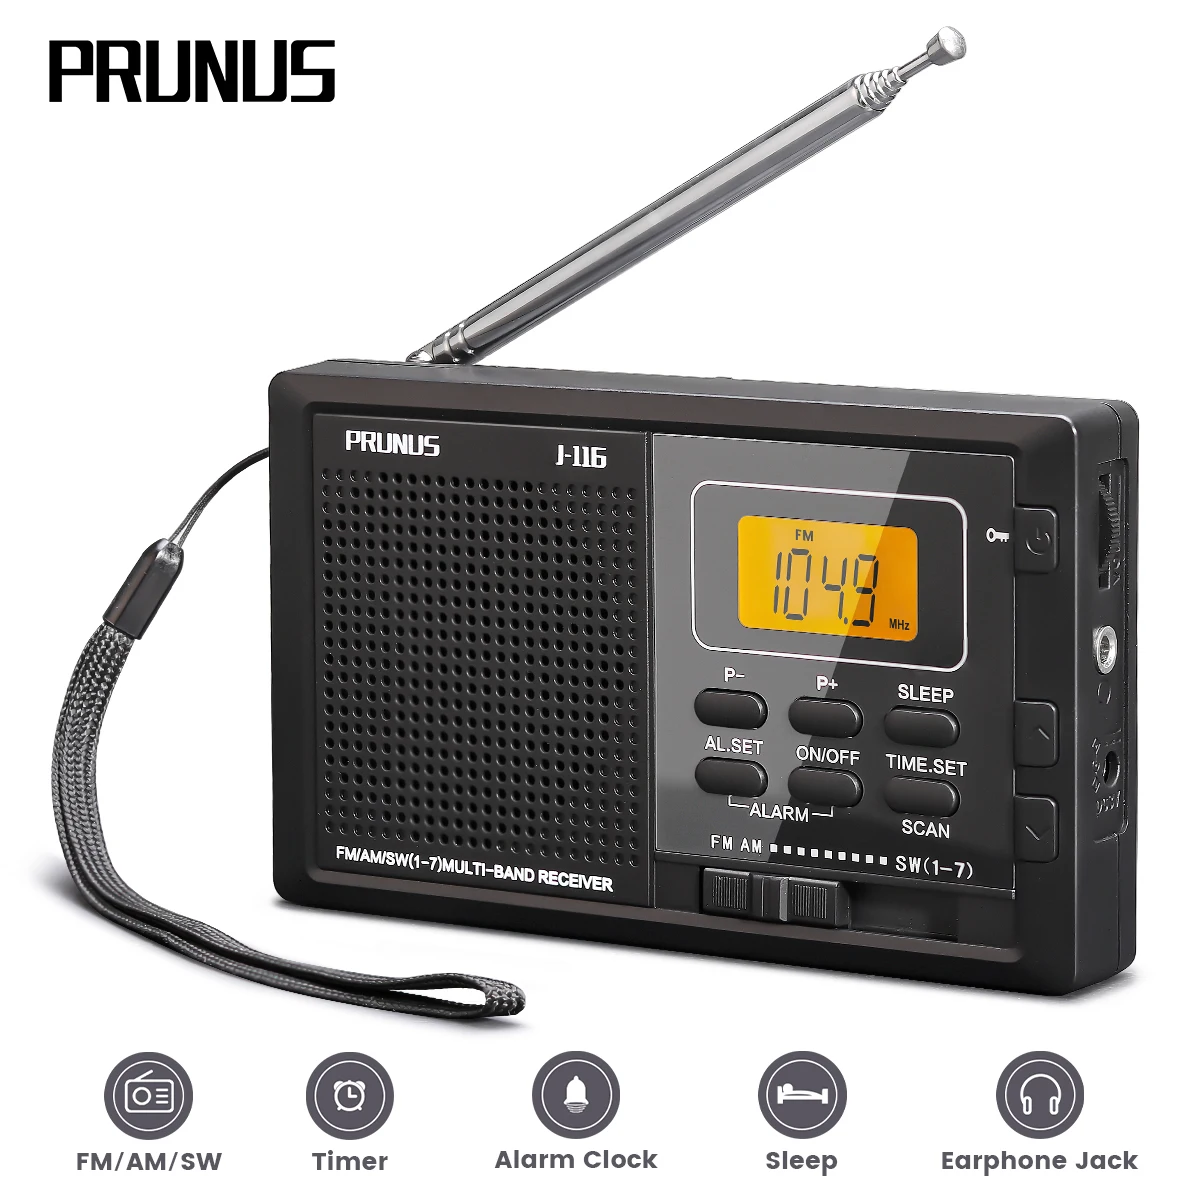 

RUNUS J-116 AM/FM/SW 9 Band Portable Radios Receiver 12/24 H Time Display Digital Radio Alarm Clock Sleep Backlight 2 AA Battery